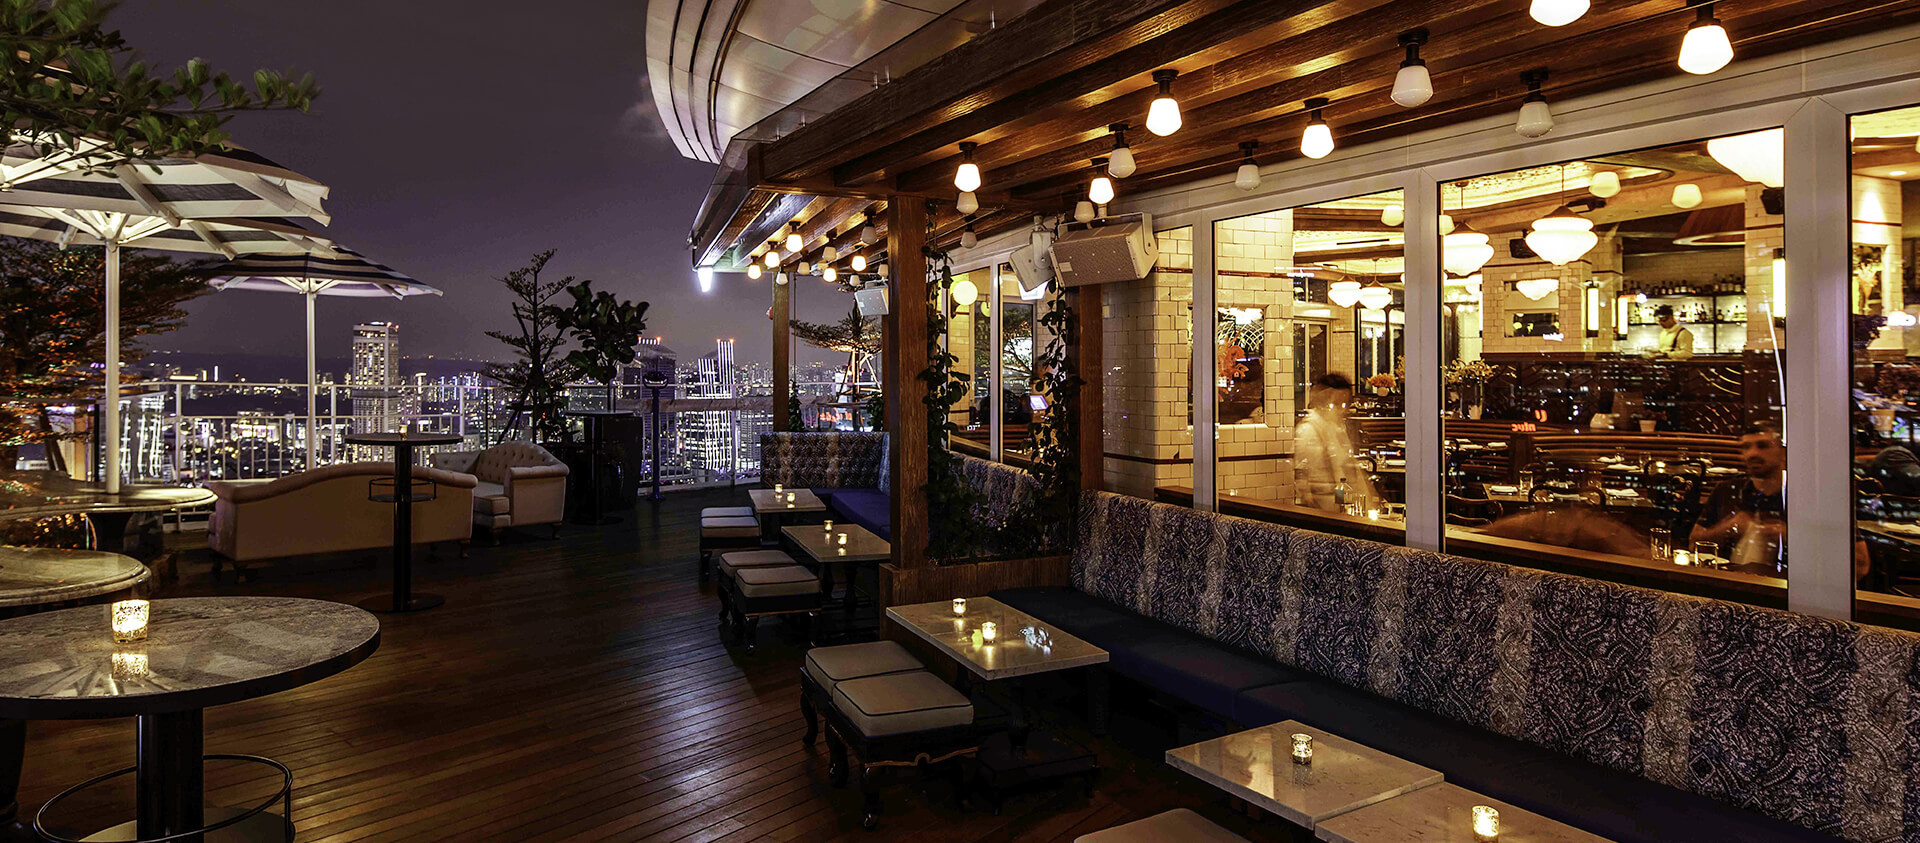 news-main-worlds-50-best-restaurants-to-be-held-in-singapore-on-25-june.1551027825.jpg